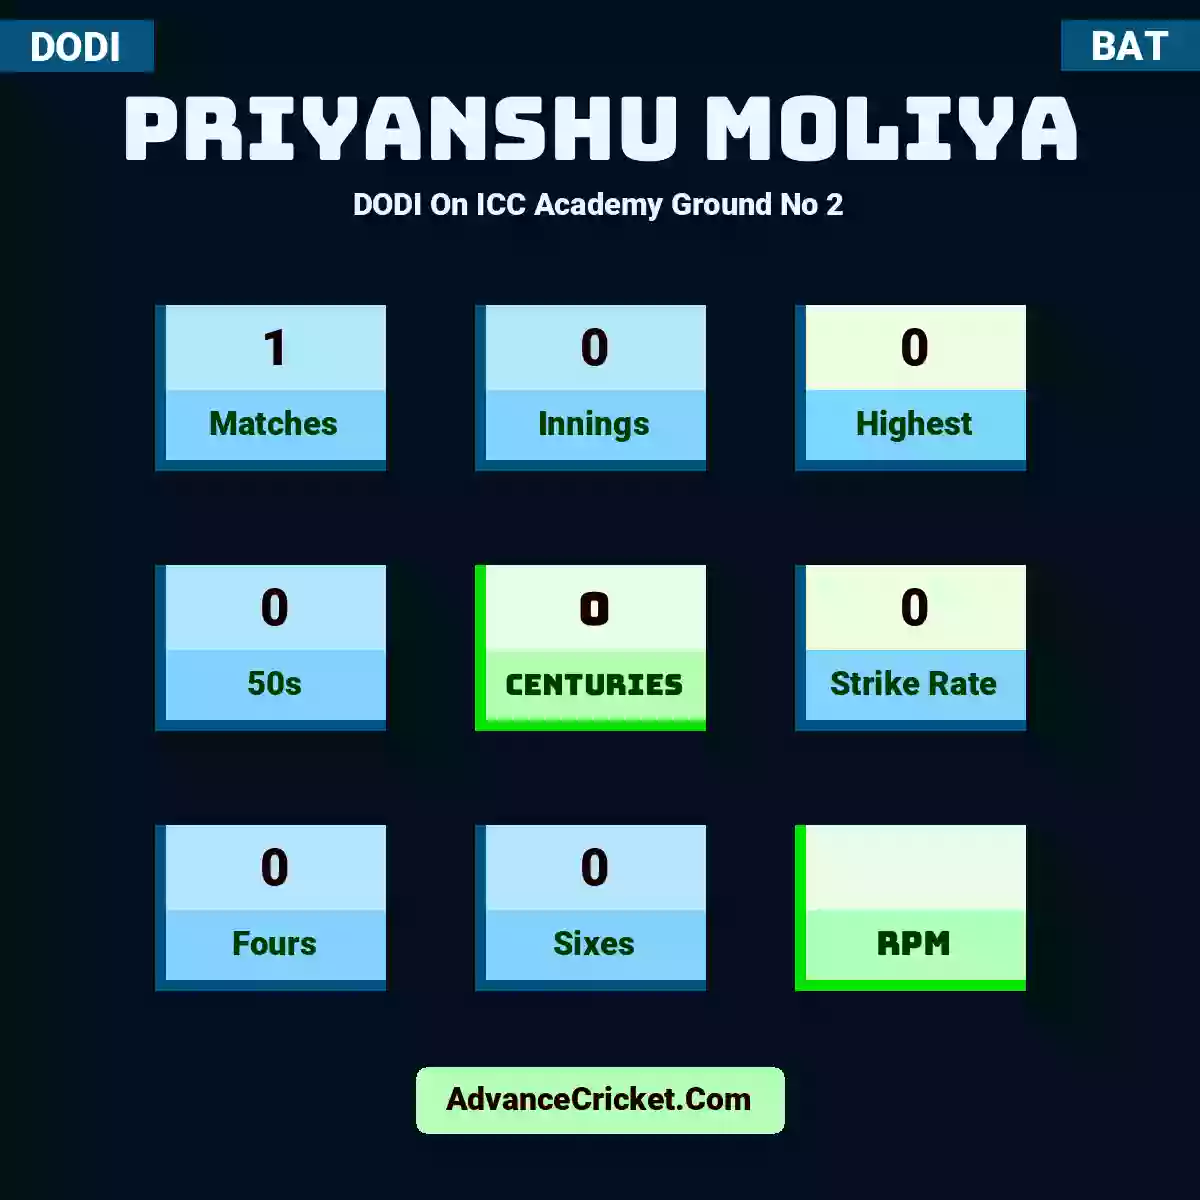 Priyanshu Moliya DODI  On ICC Academy Ground No 2, Priyanshu Moliya played 1 matches, scored 0 runs as highest, 0 half-centuries, and 0 centuries, with a strike rate of 0. P.Moliya hit 0 fours and 0 sixes.